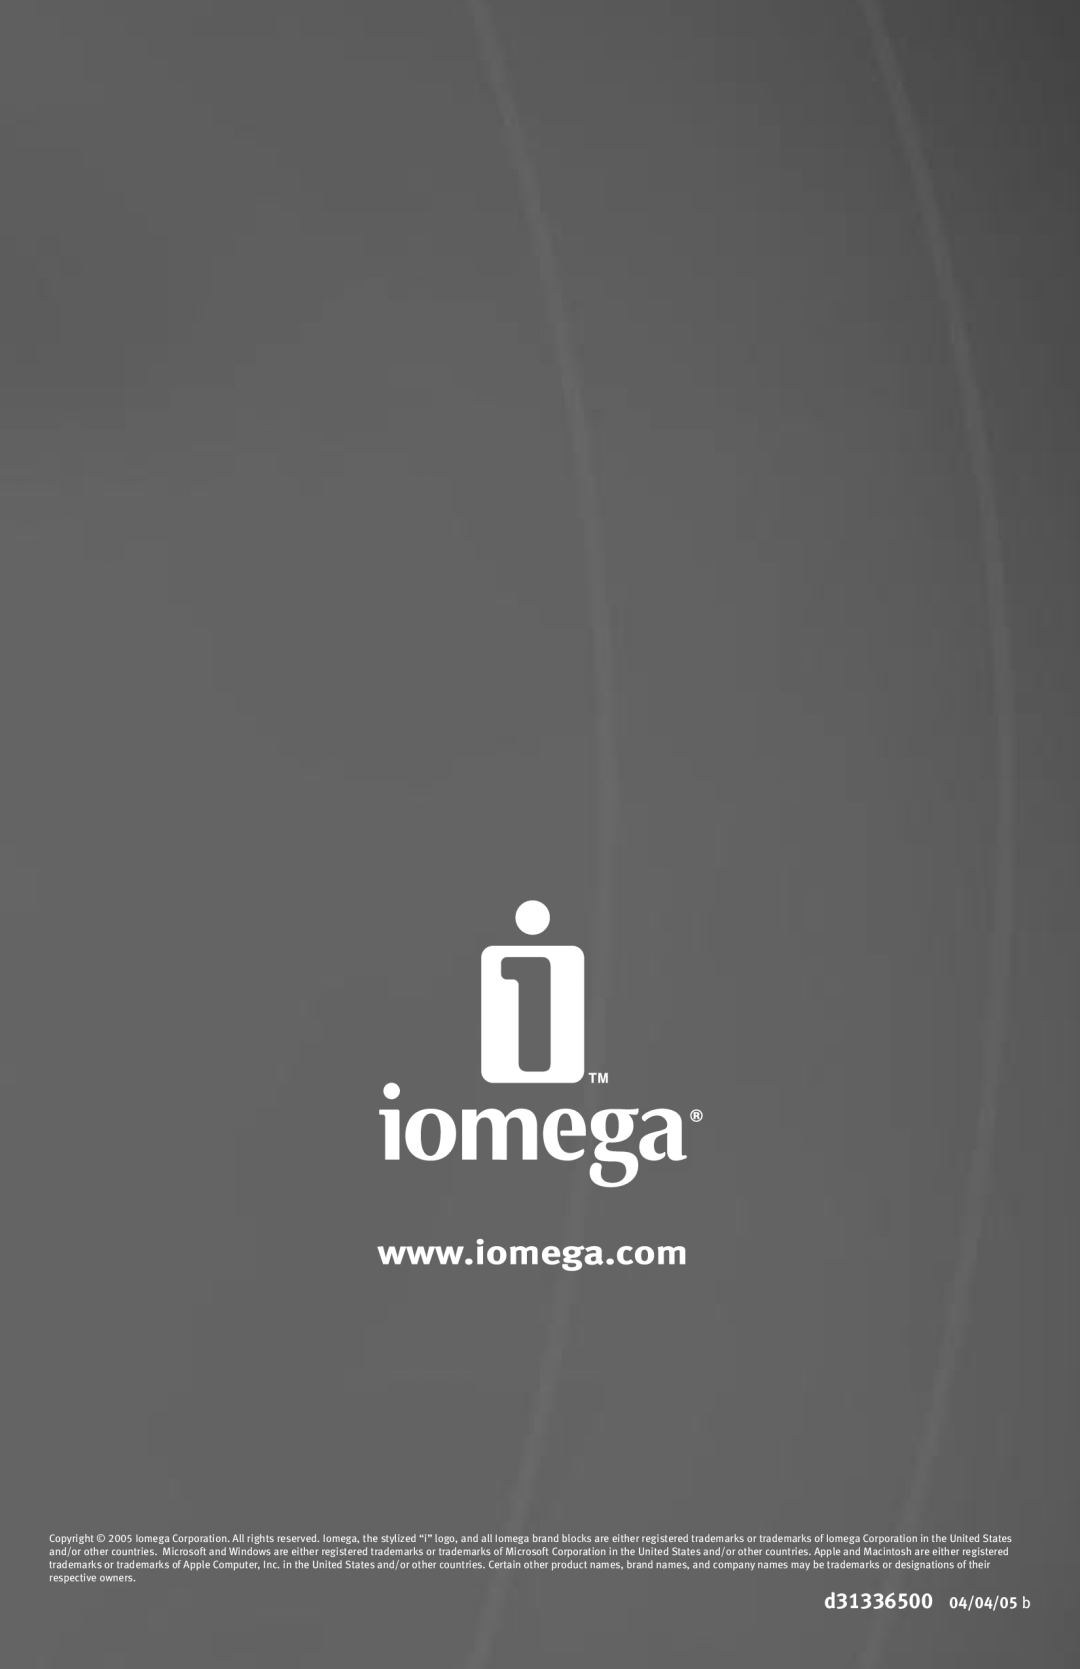 Iomega 100D quick start d31336500 04/04/05 b 